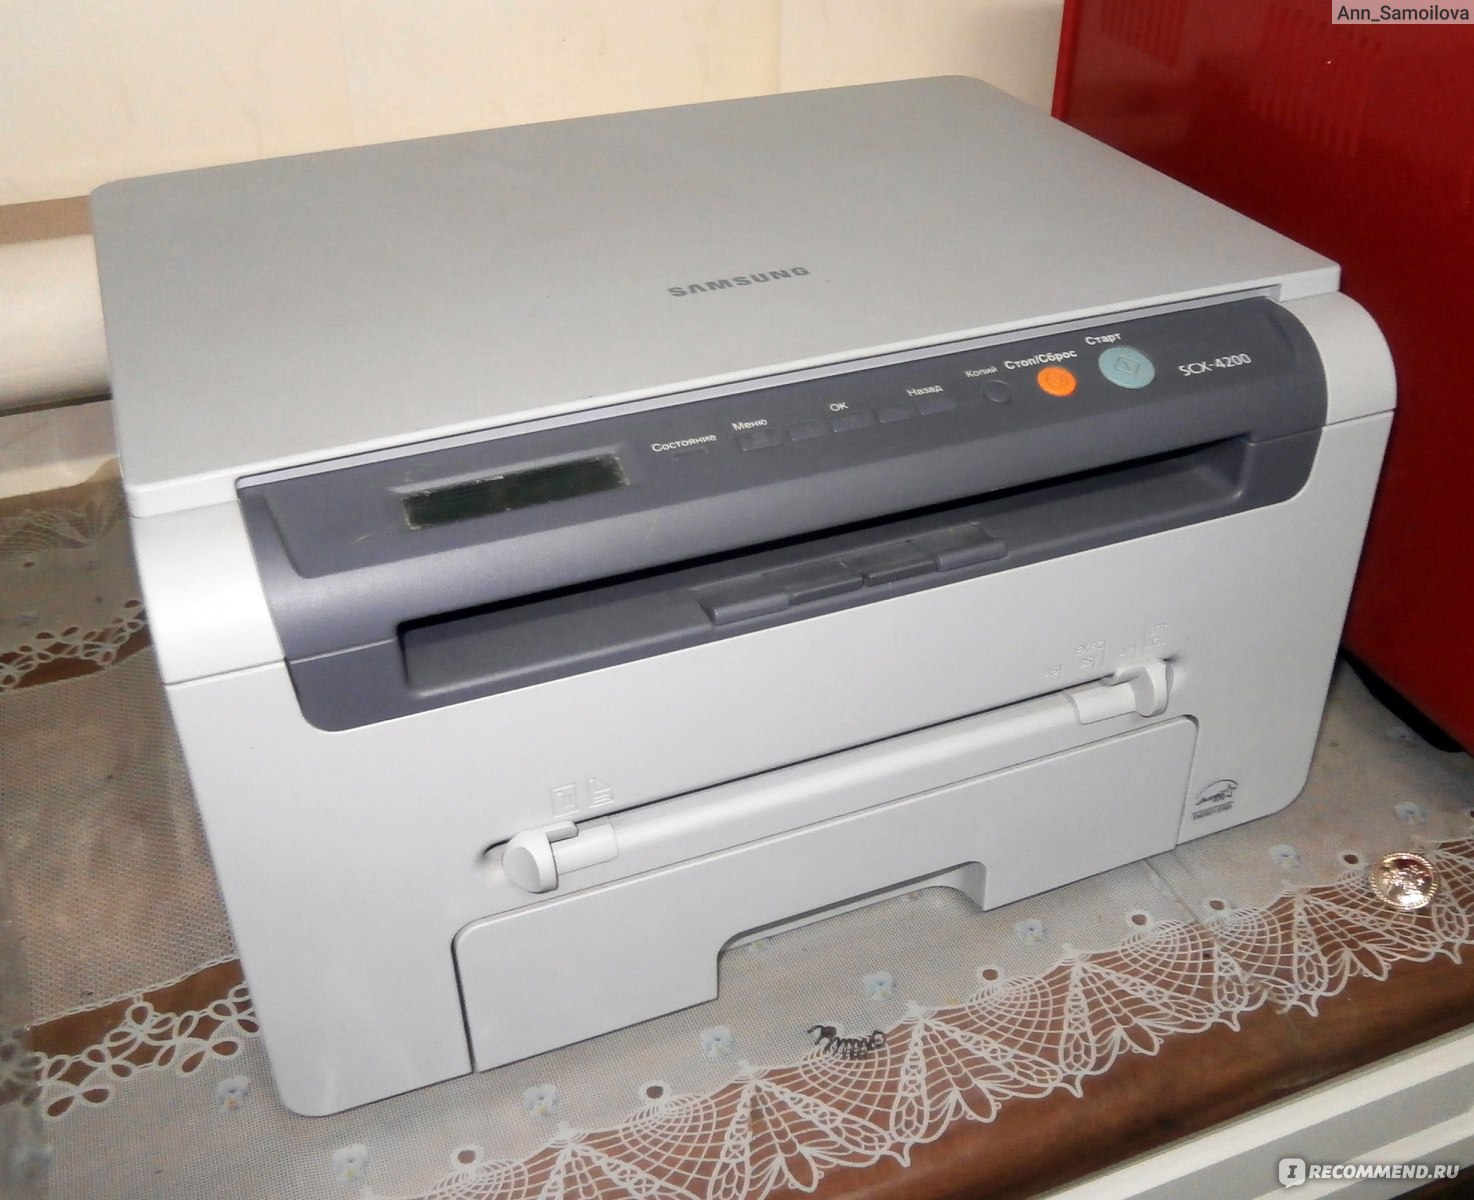 Samsung scx 4200 series. МФУ Samsung SCX-4200. Принтер самсунг 4200. Принтер самсунг SCX 4200. Принтер самсунг CX 4200.